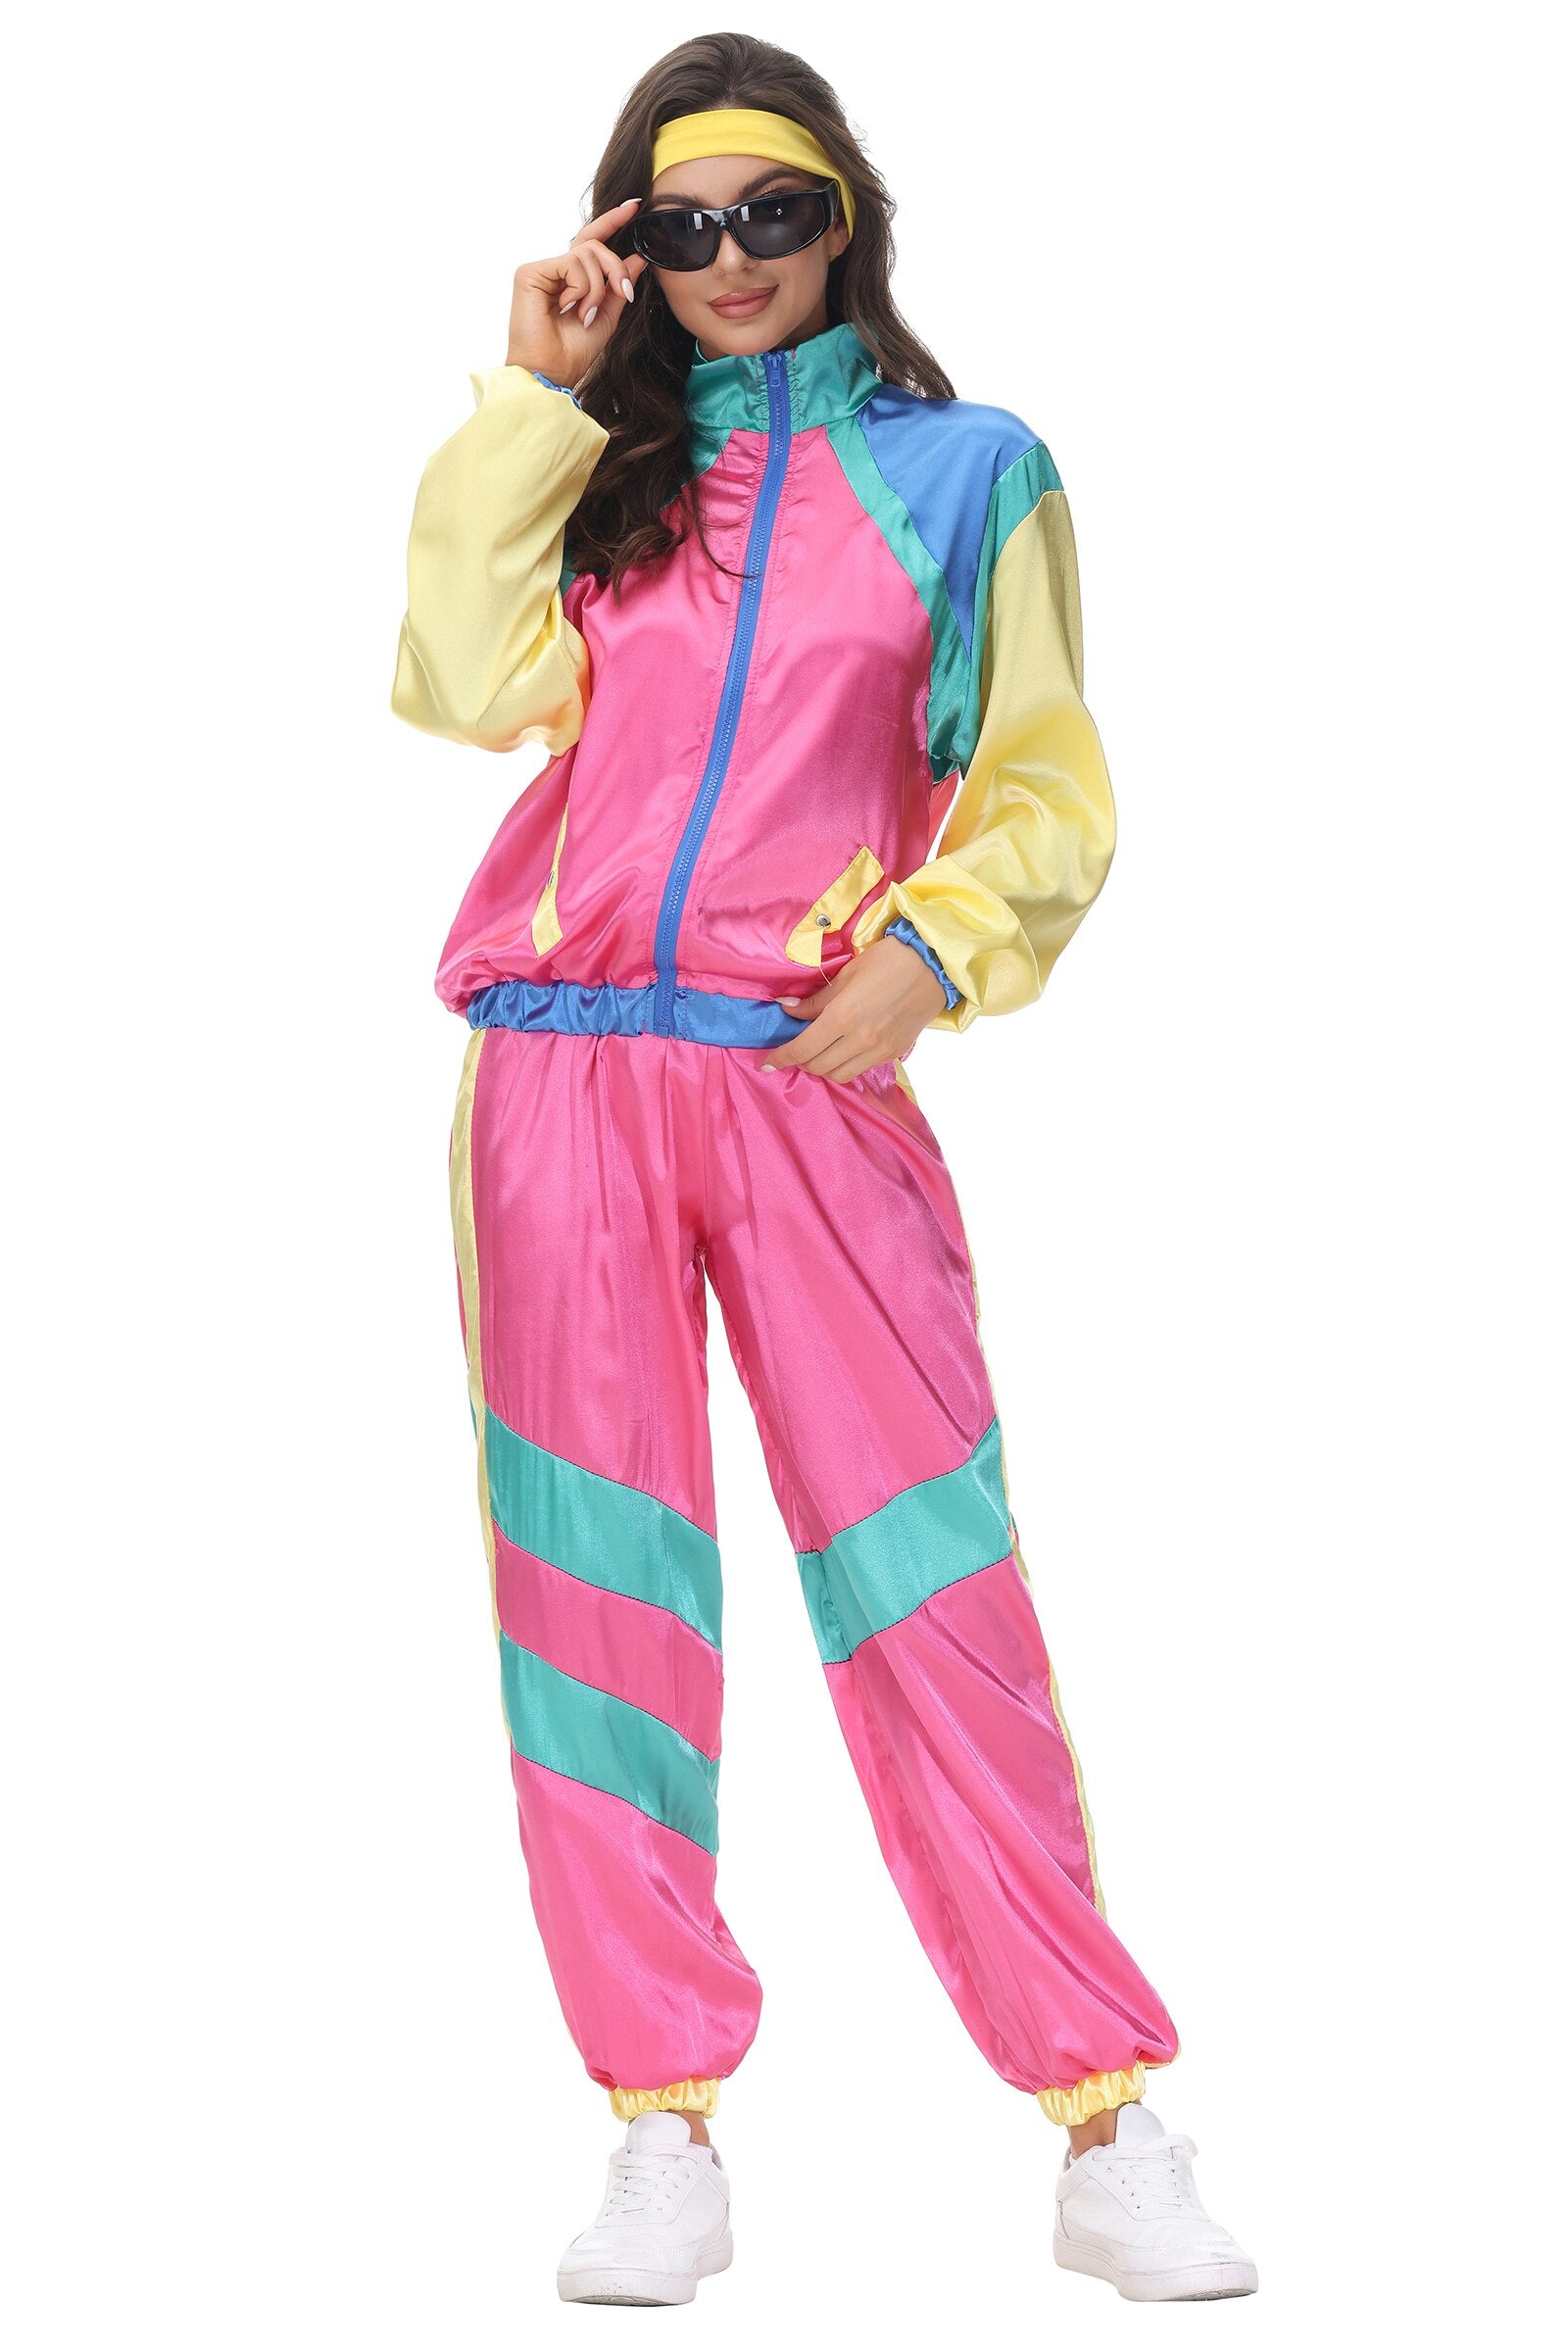 Costume beauf | Tenue flash disco beauf 60s 70s